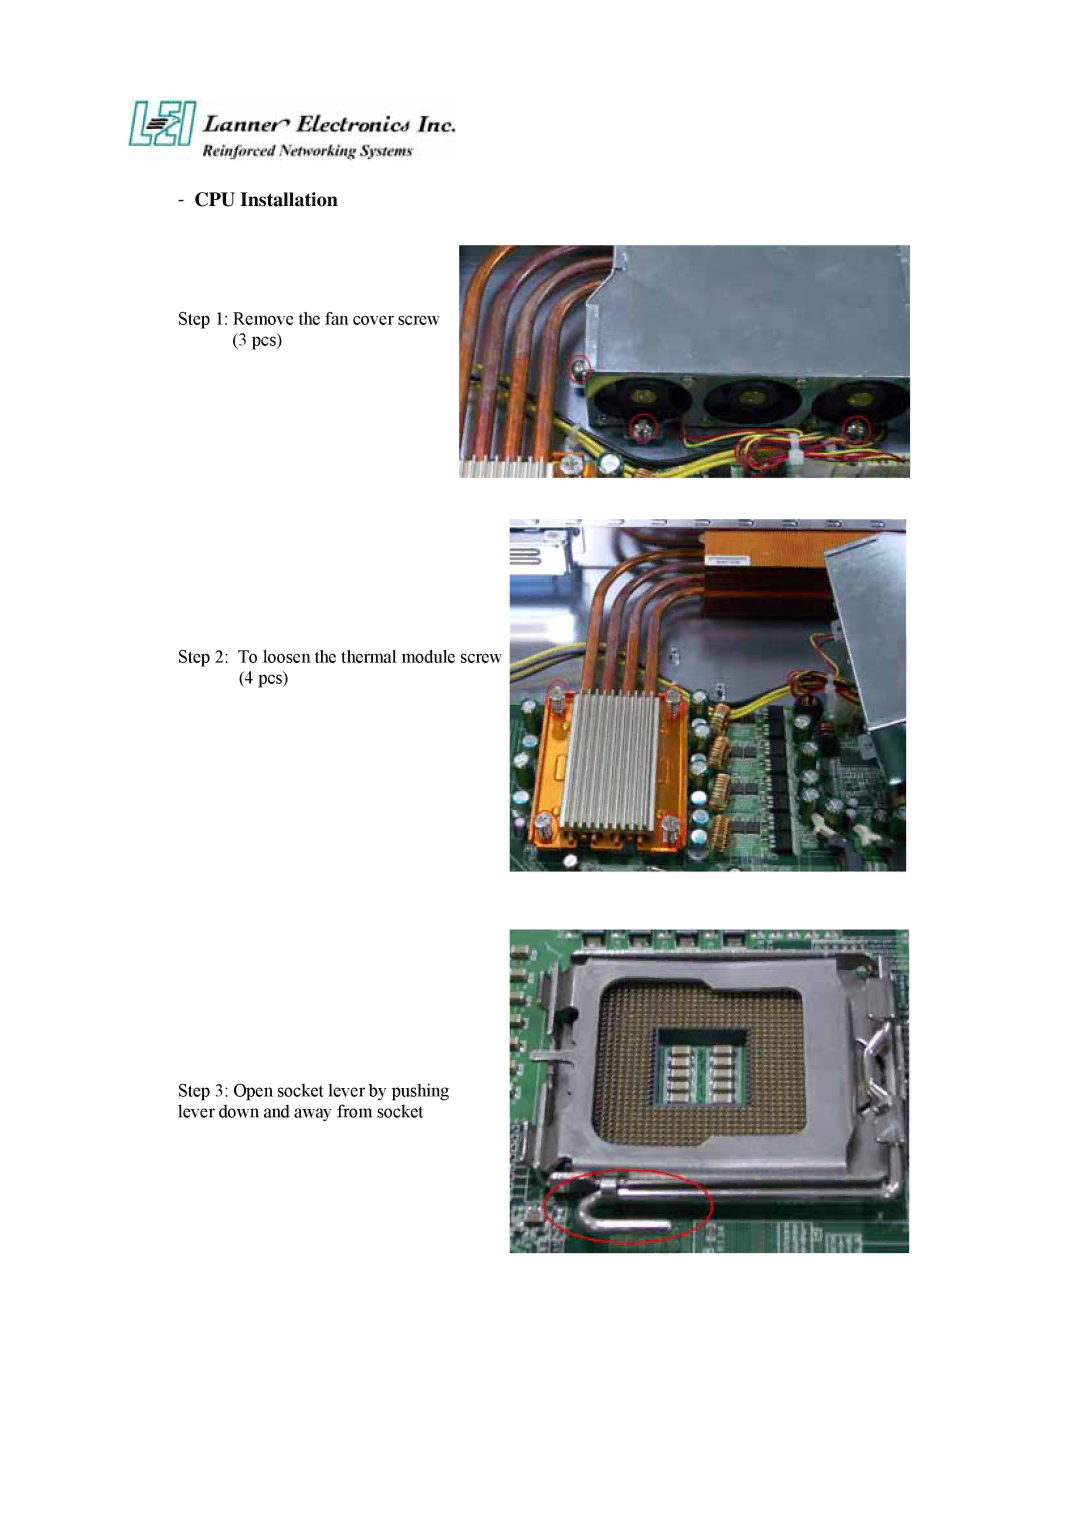 Lanner electronic FW-7870, 19" 1U Intel Pentium 4 Socket T Rackmount Network Security Platform user manual CPU Installation 